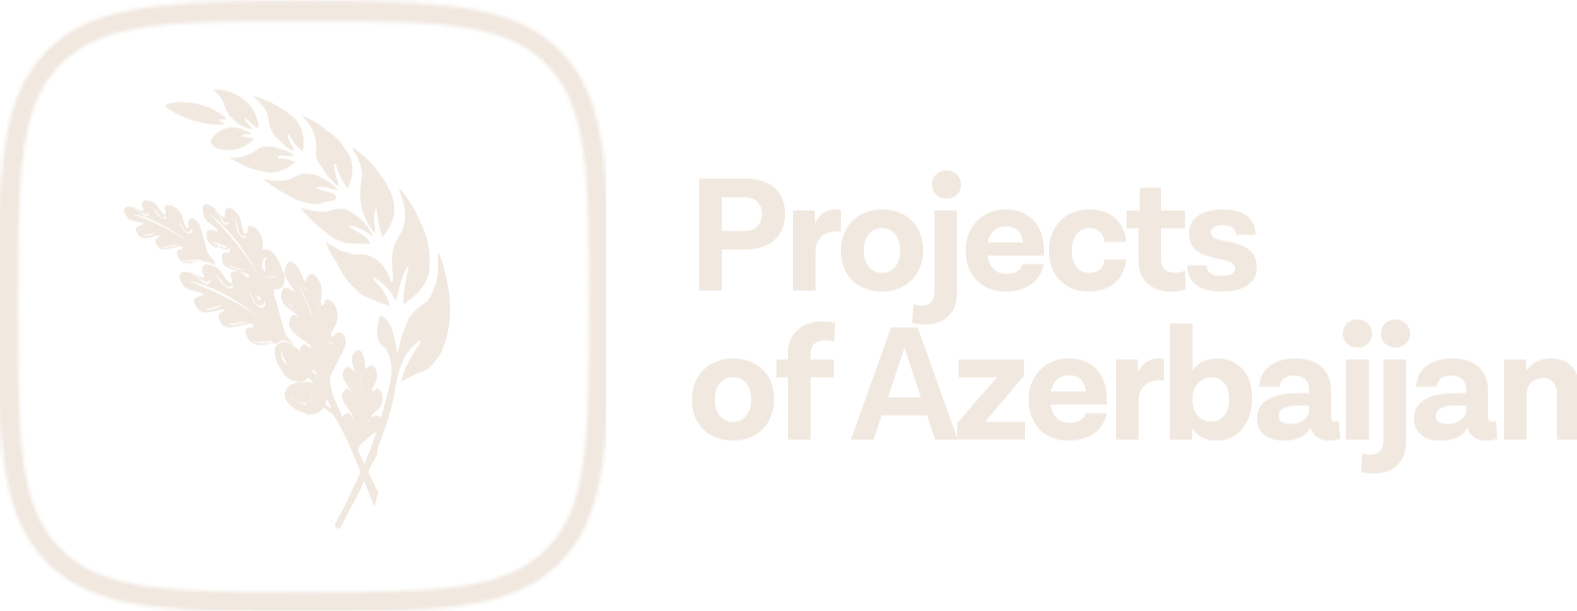 Projects of Azerbaijan